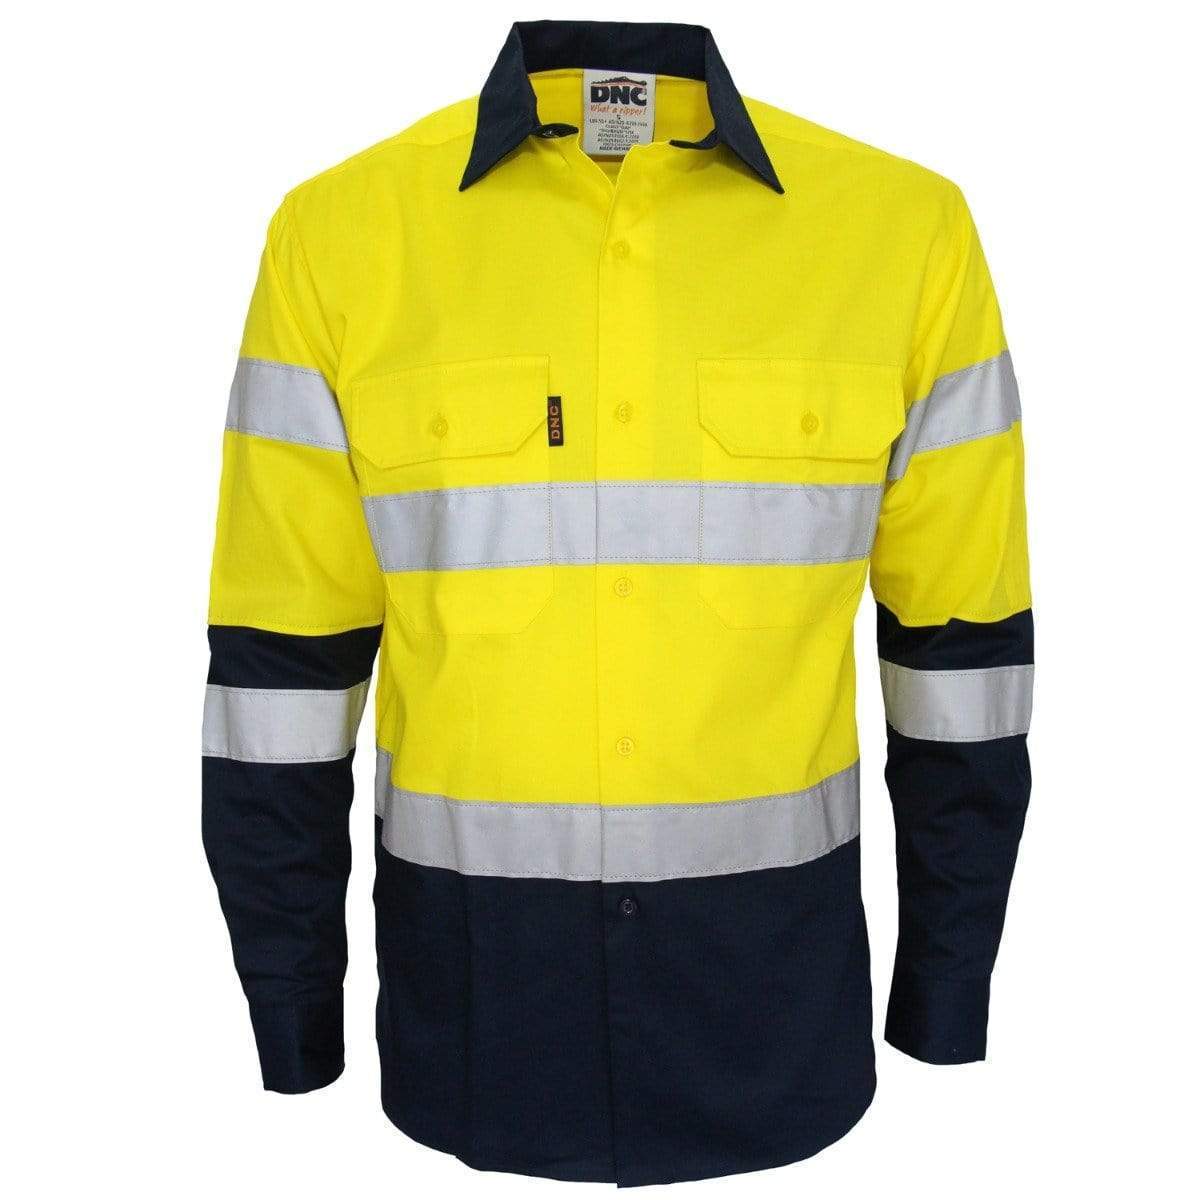 DNC Workwear Work Wear Yellow/Navy / S DNC WORKWEAR Hi-Vis 2-tone Bio-Motion Taped Shirt 3976